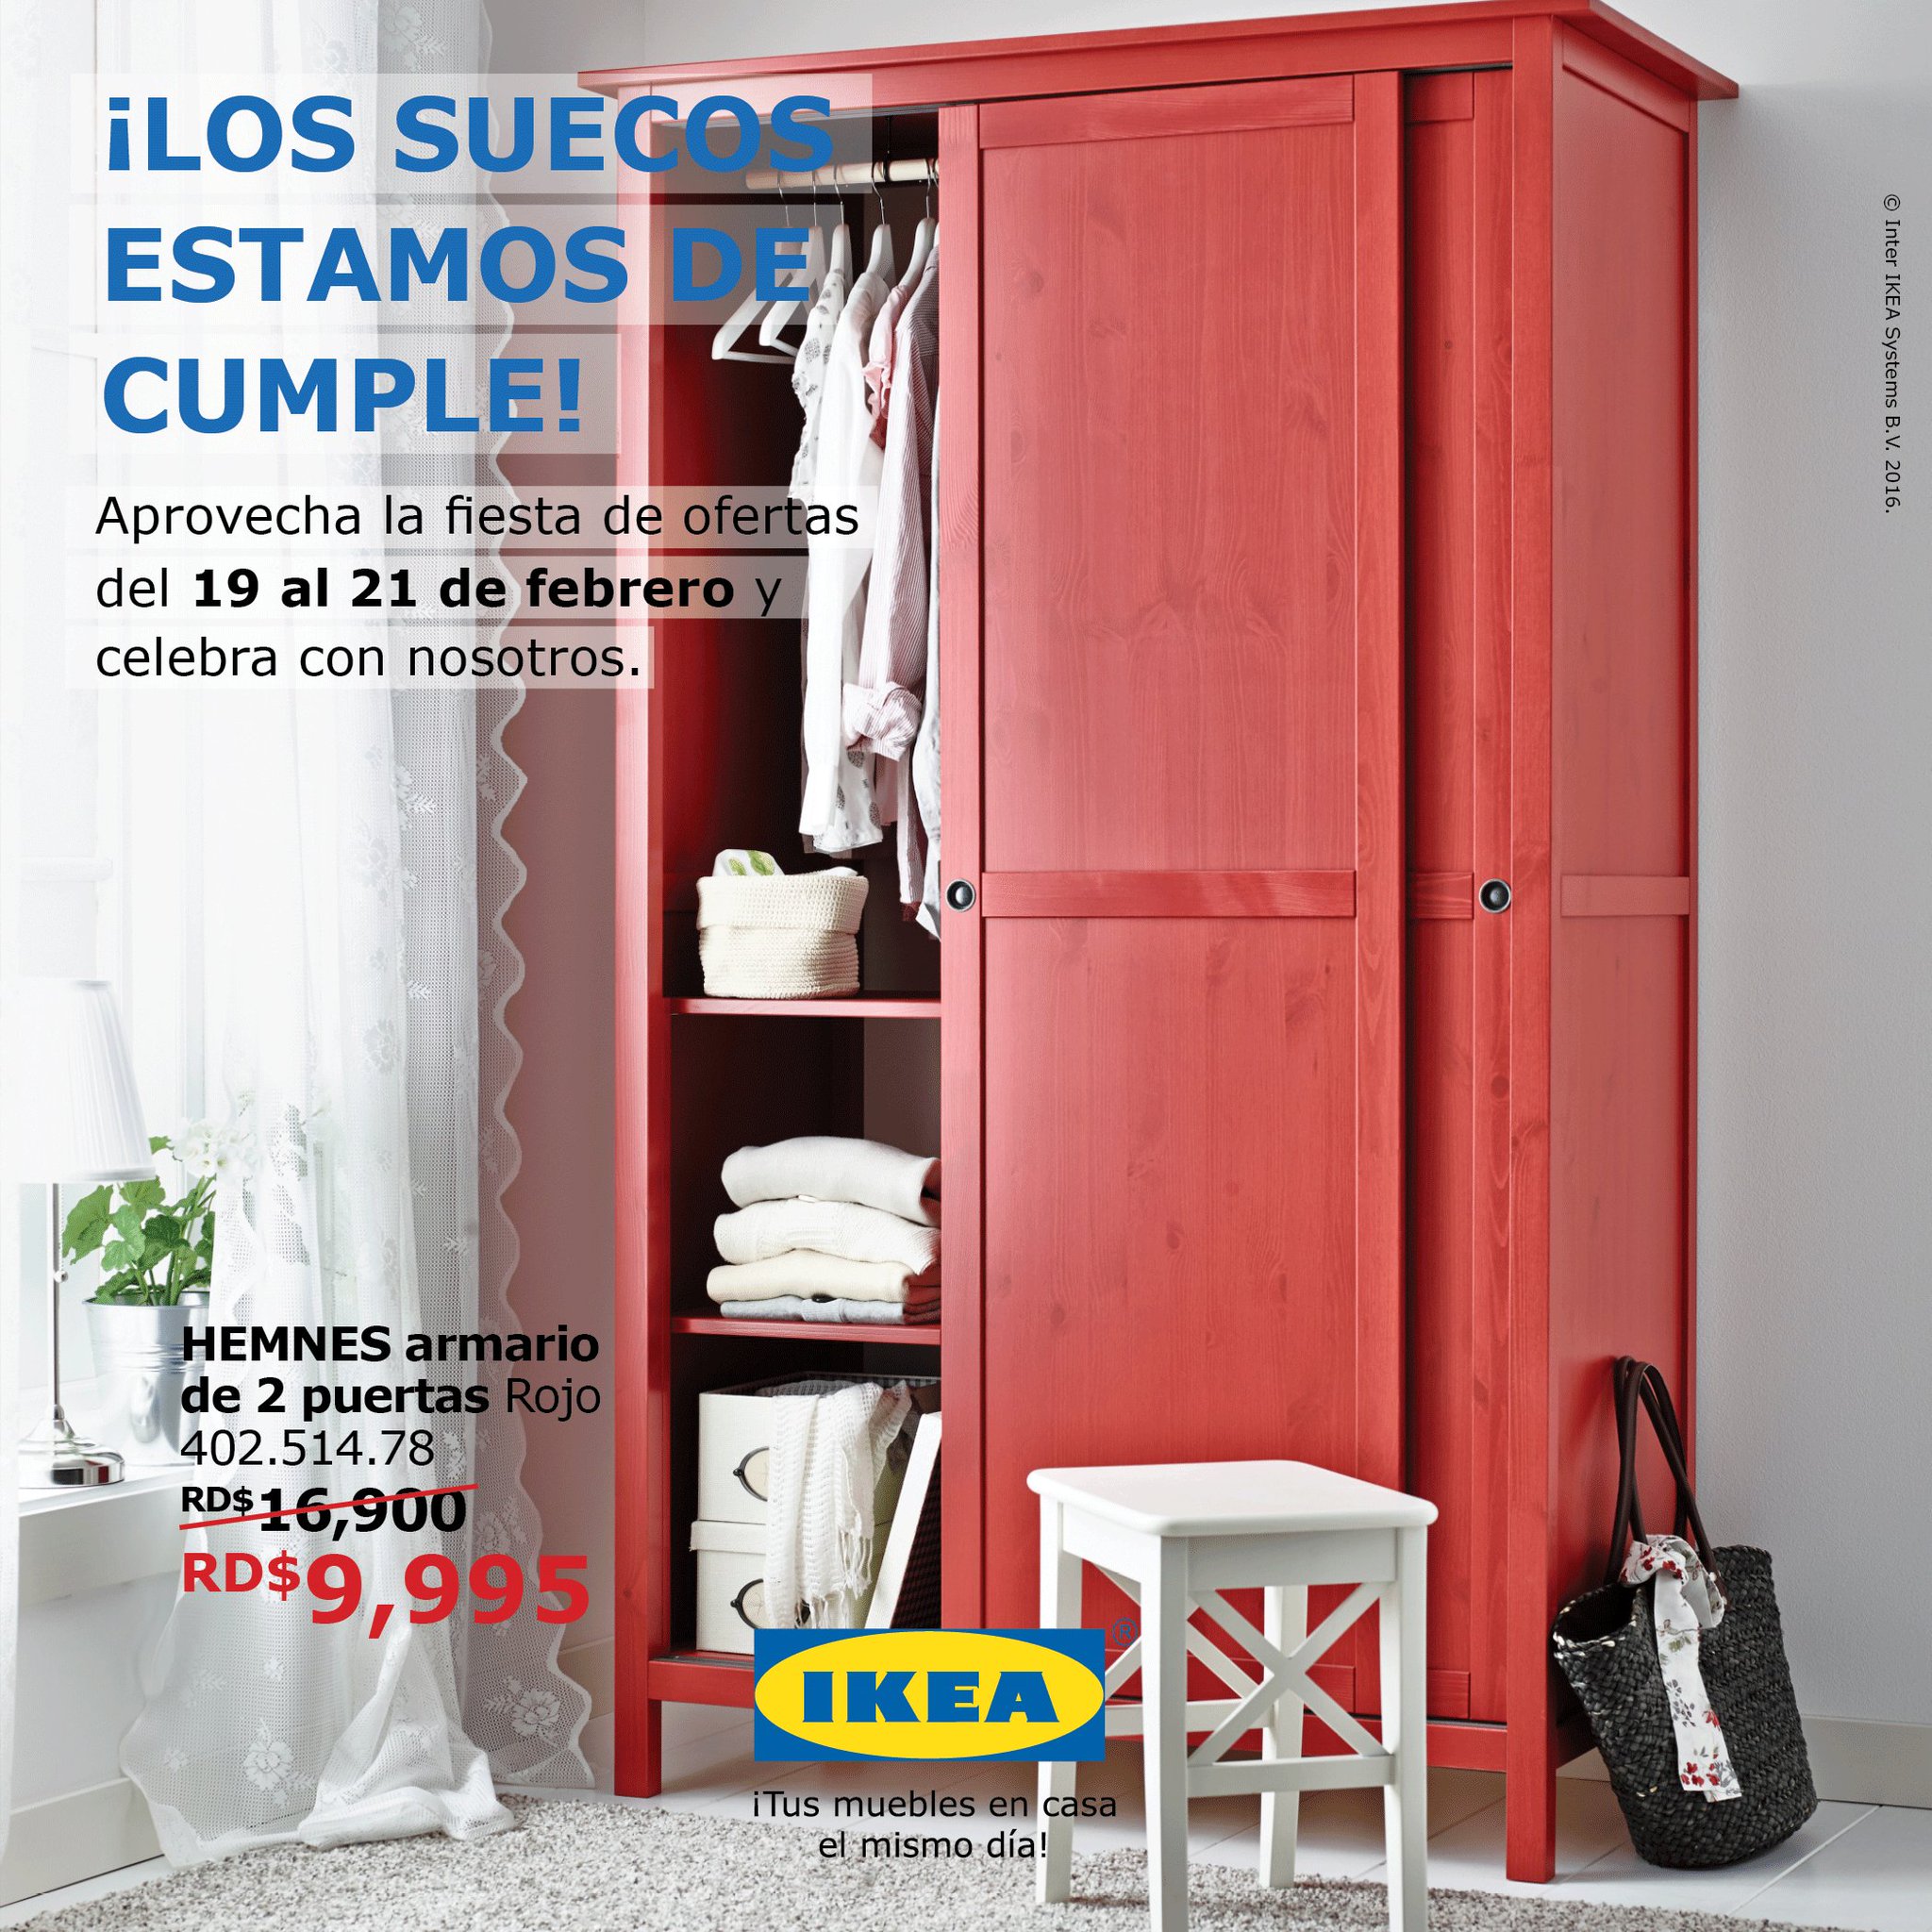 IKEA Dominicana on Twitter: "¡Hoy es el último día! Aprovecha oferta armario rojo HEMNES de 2 puertas. #AniversarioIKEA2016 https://t.co/cloKUj52Gd" / Twitter